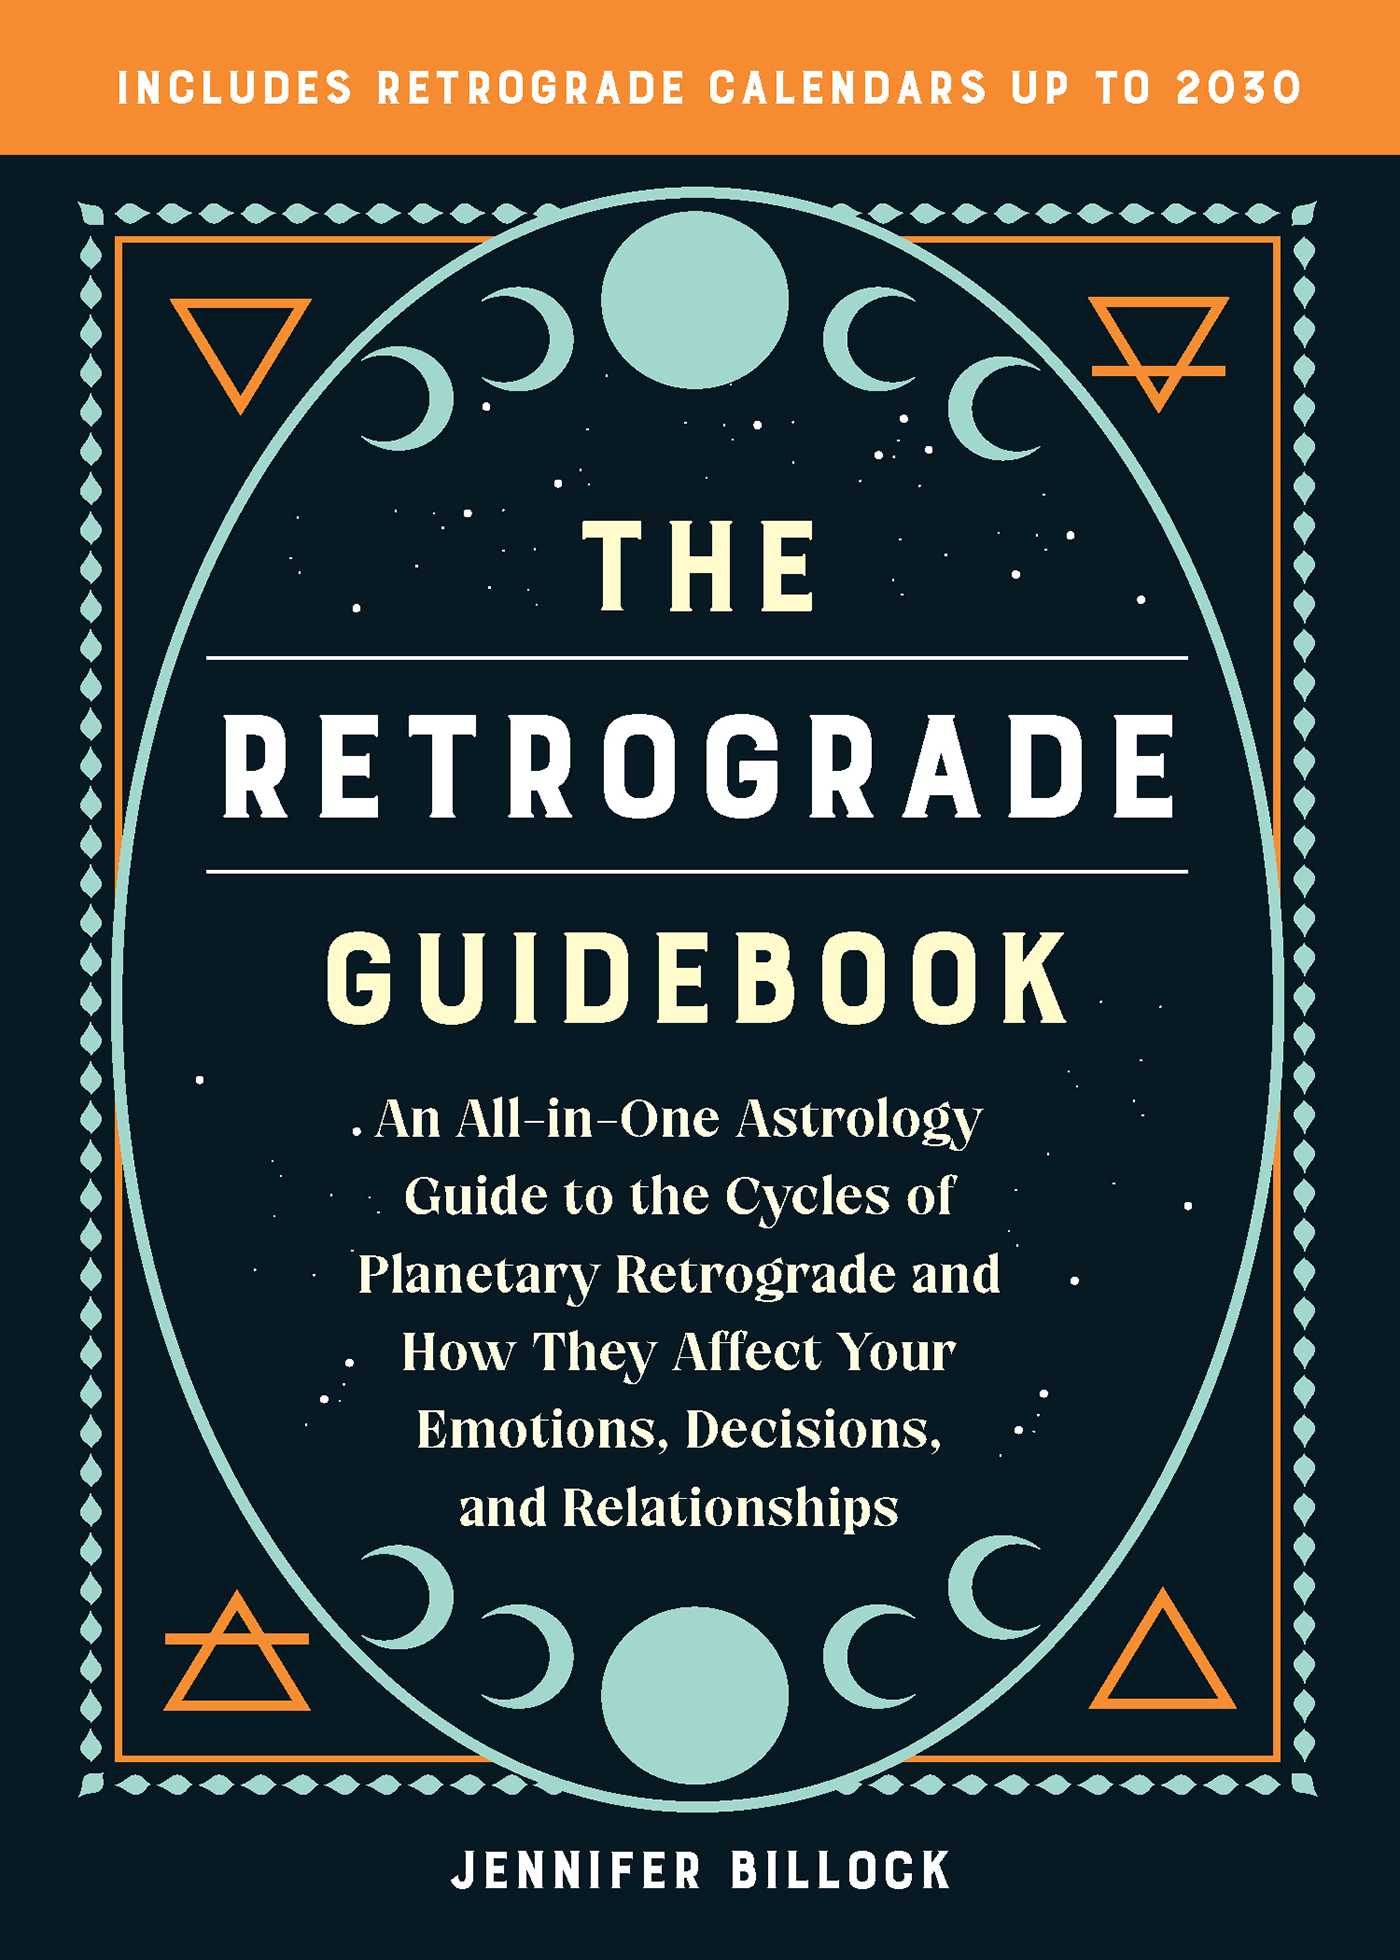 Retrograde Guidebook-front.indd